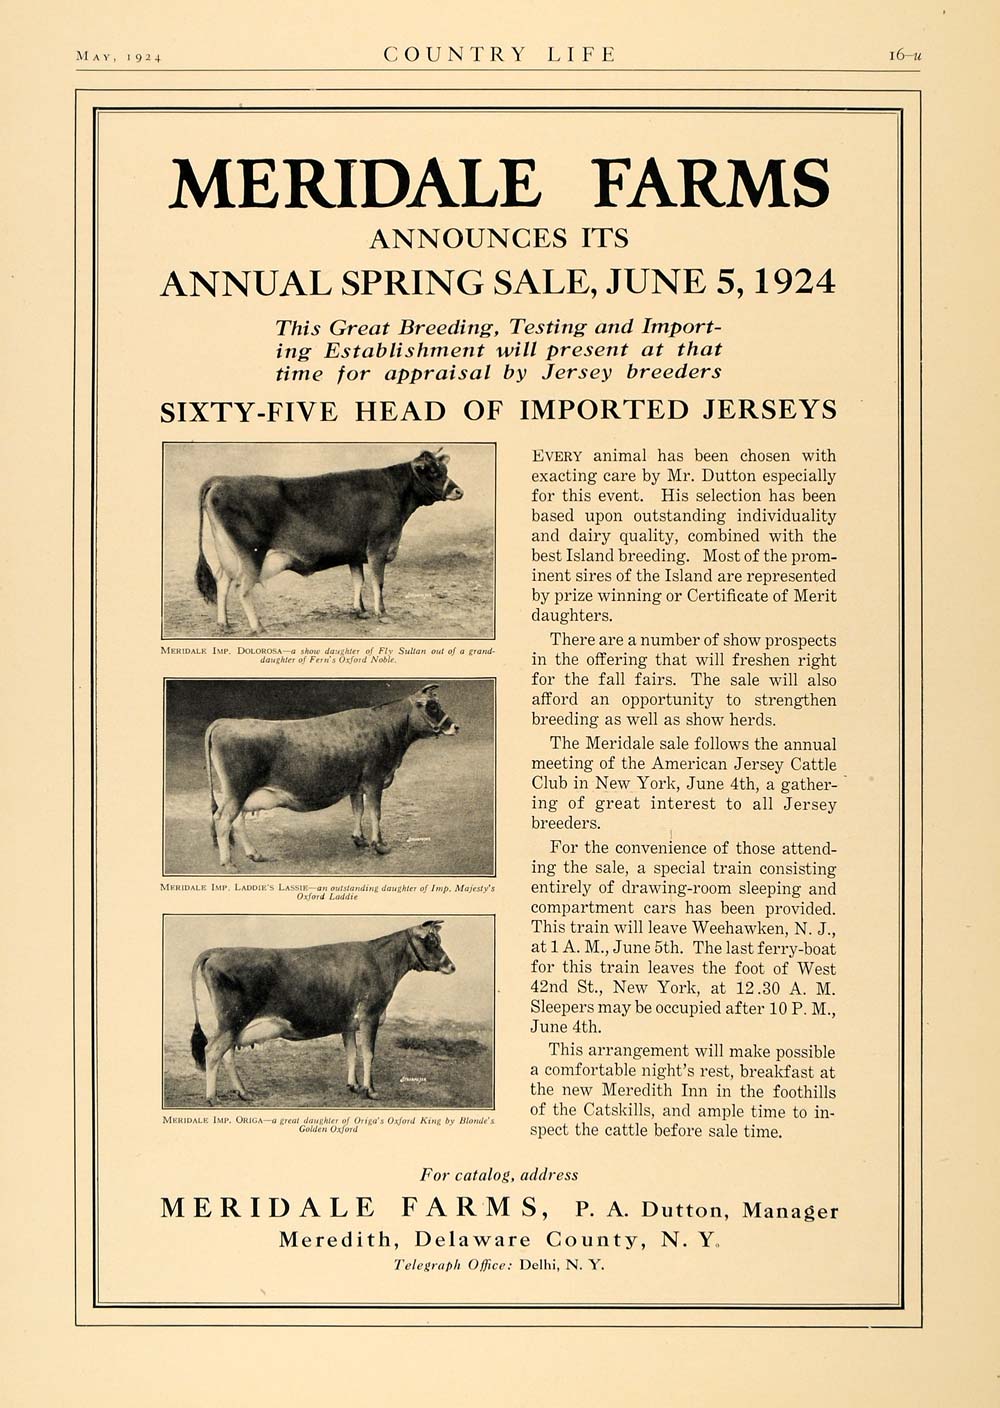 1924 Ad Meridale Farm Jersey Cows Dolorosa Lassie Origa - ORIGINAL CL4